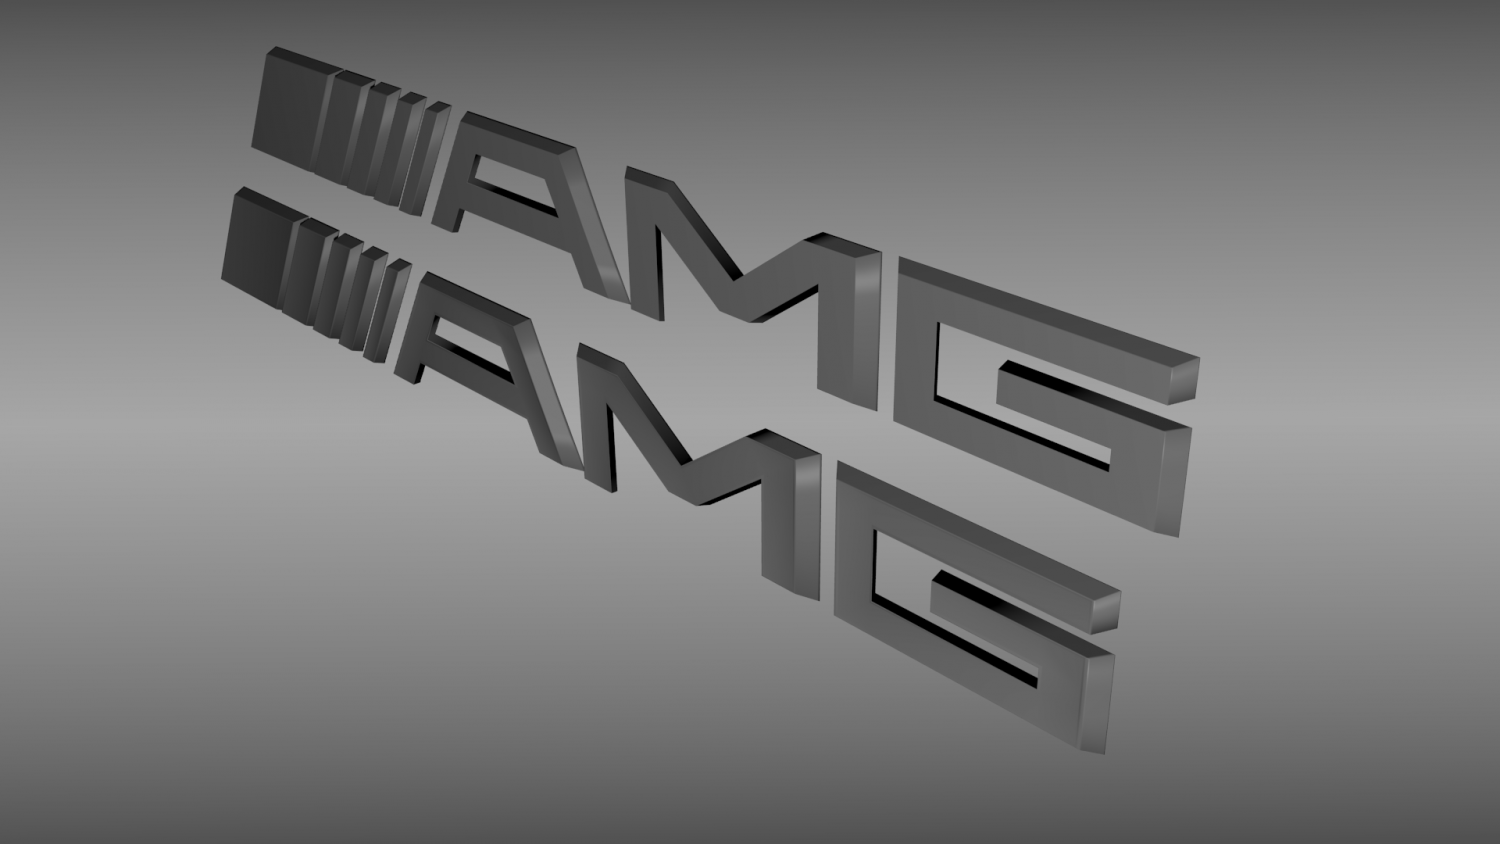 mercedes AMG logo, 3D CAD Model Library